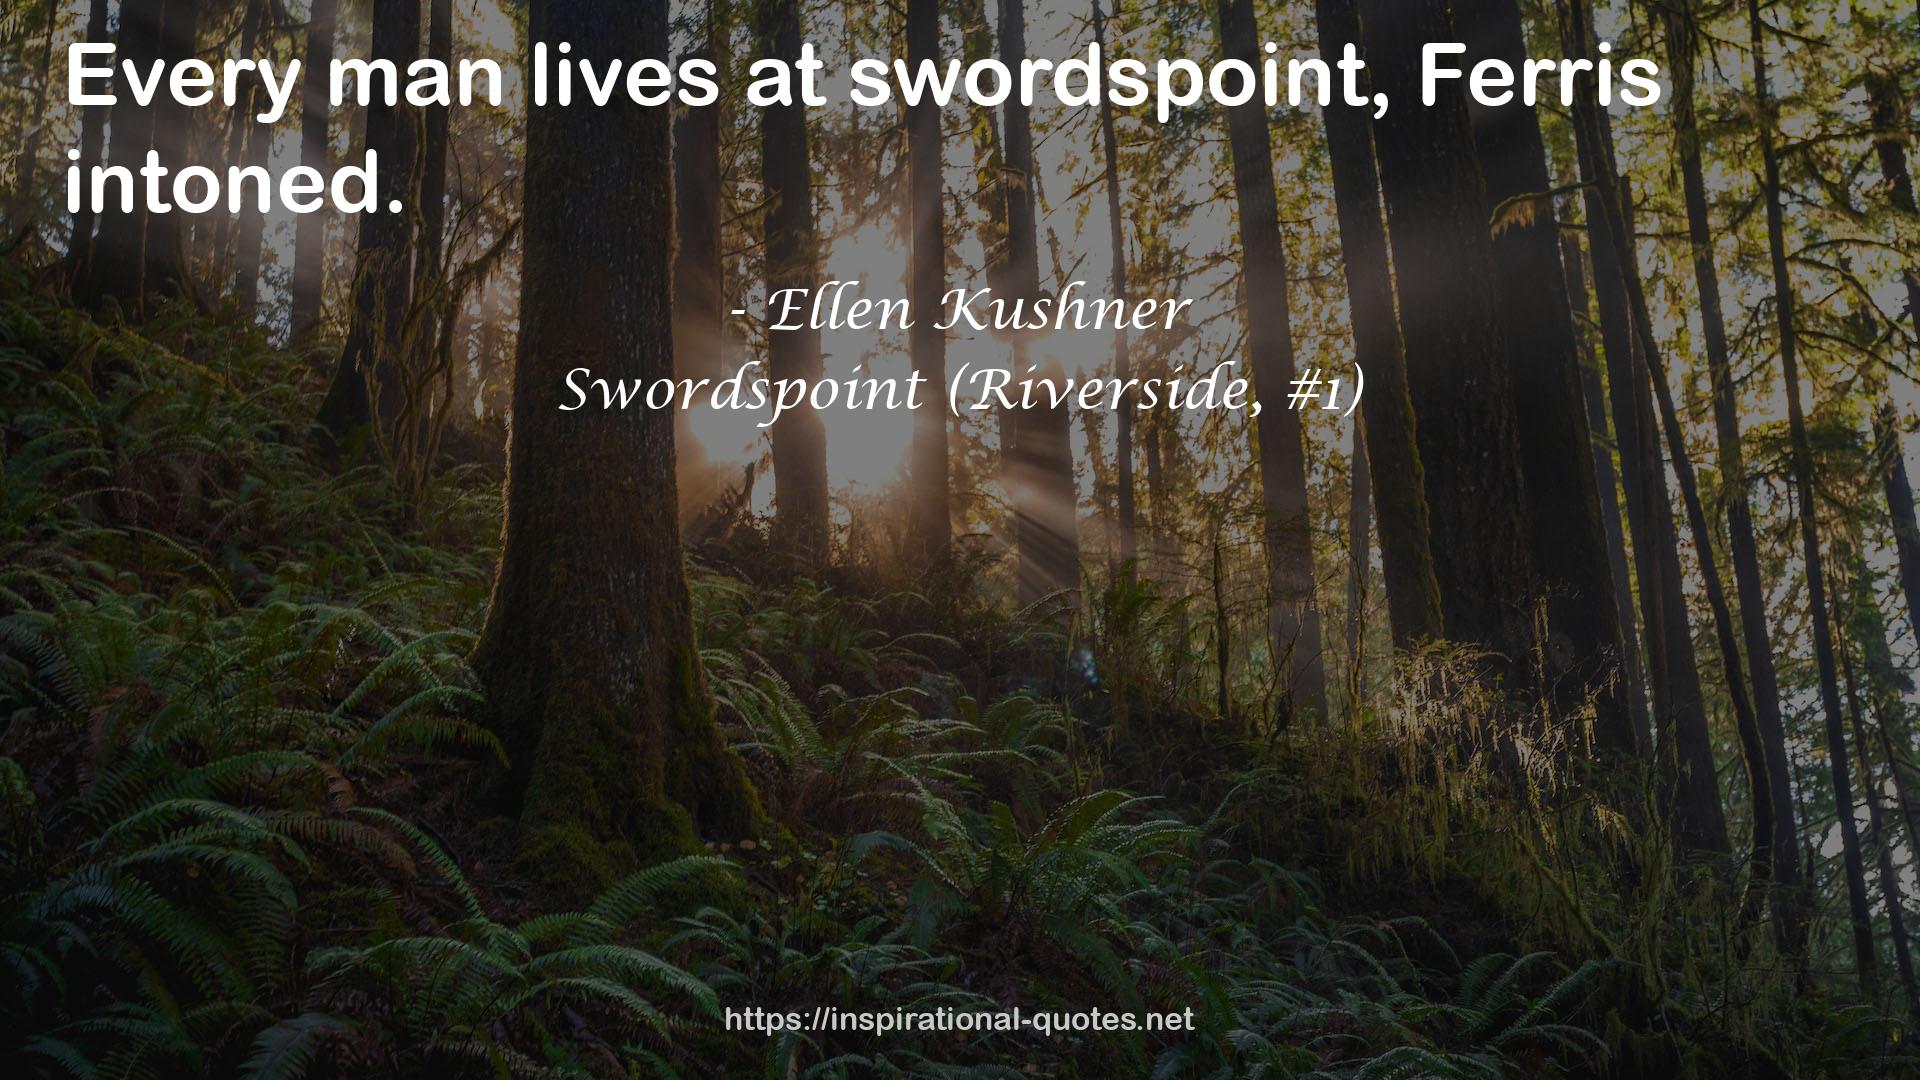 Swordspoint (Riverside, #1) QUOTES